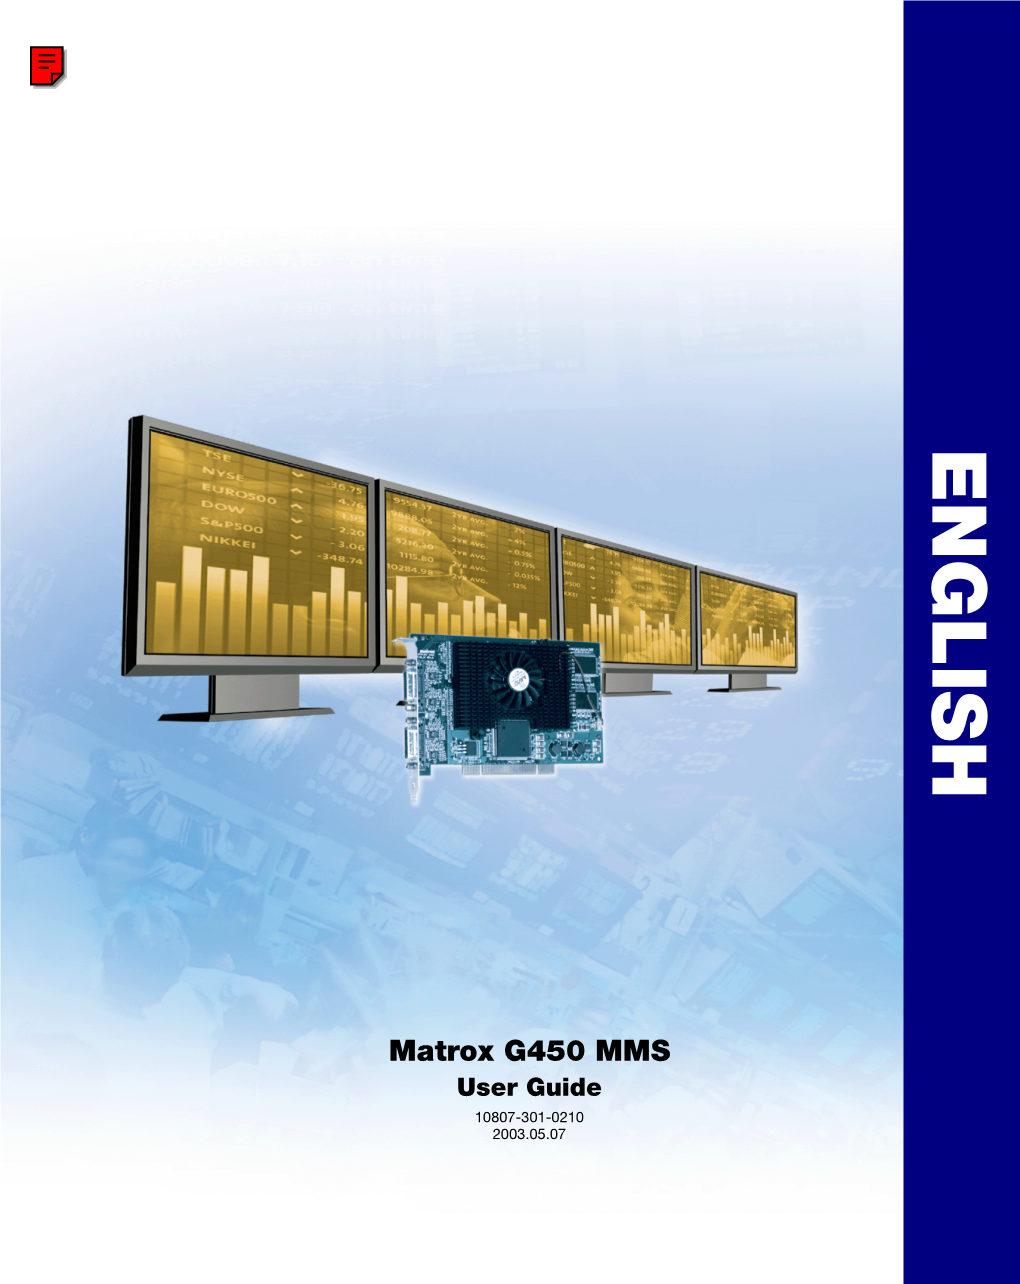 Matrox G450 MMS User Guide 10807-301-0210 2003.05.07 Overview